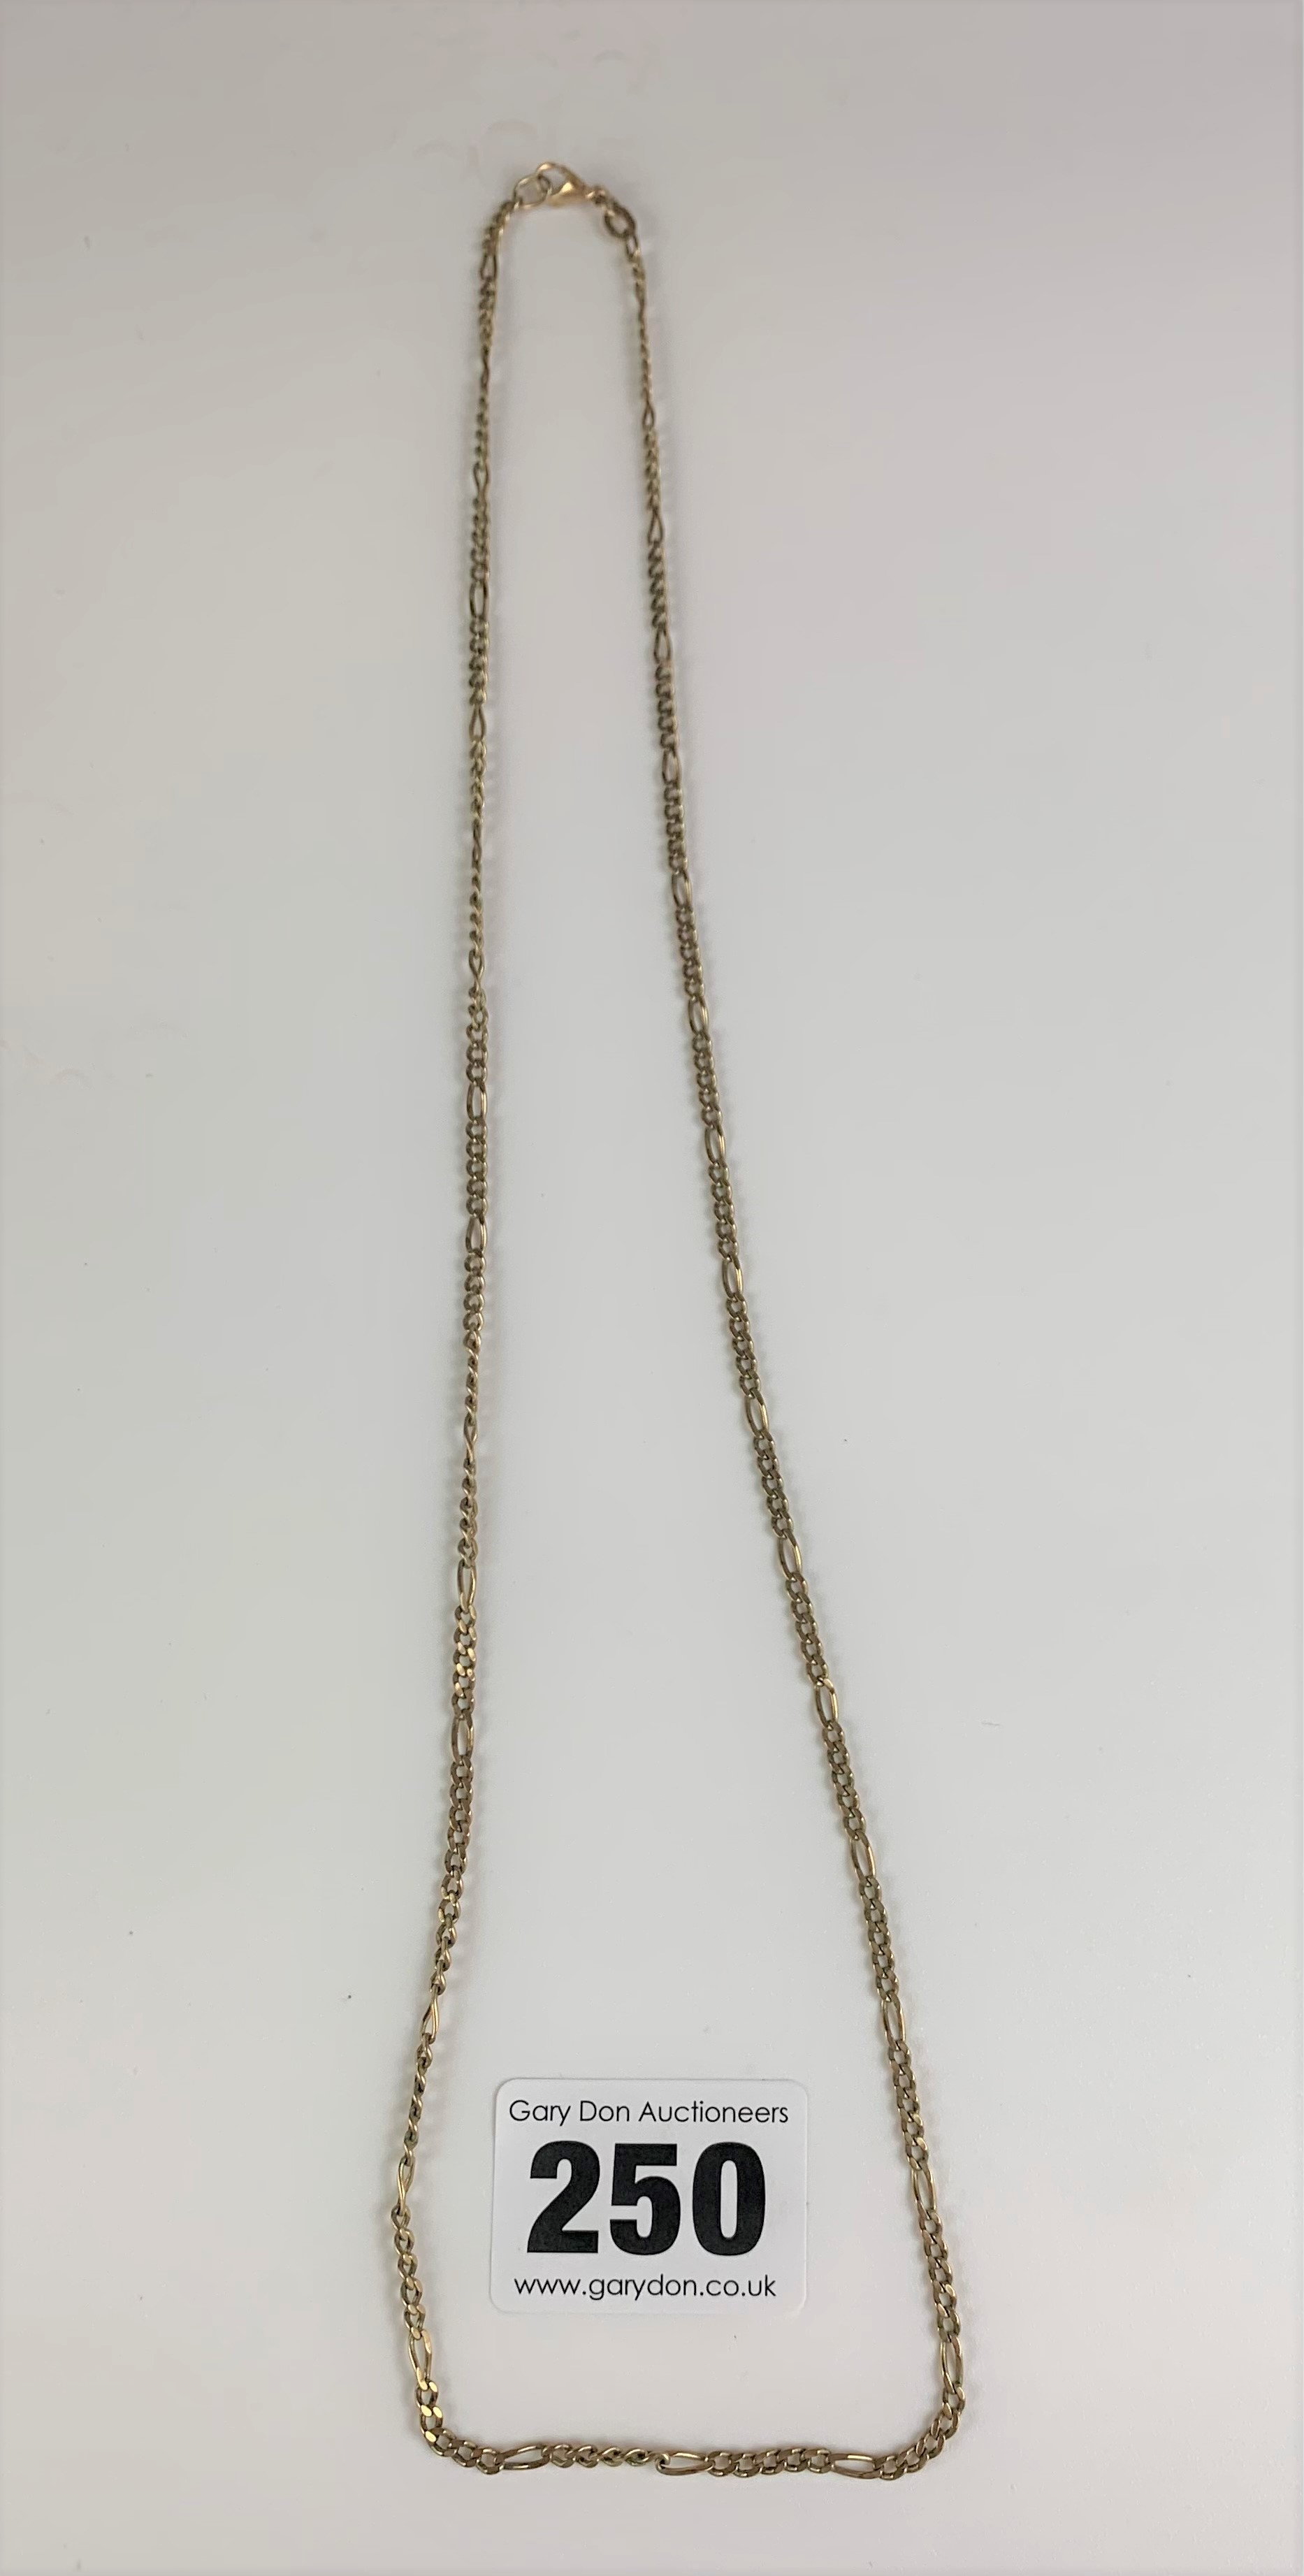 9k gold necklace, length 23”, w: 7.1 gms - Image 2 of 3